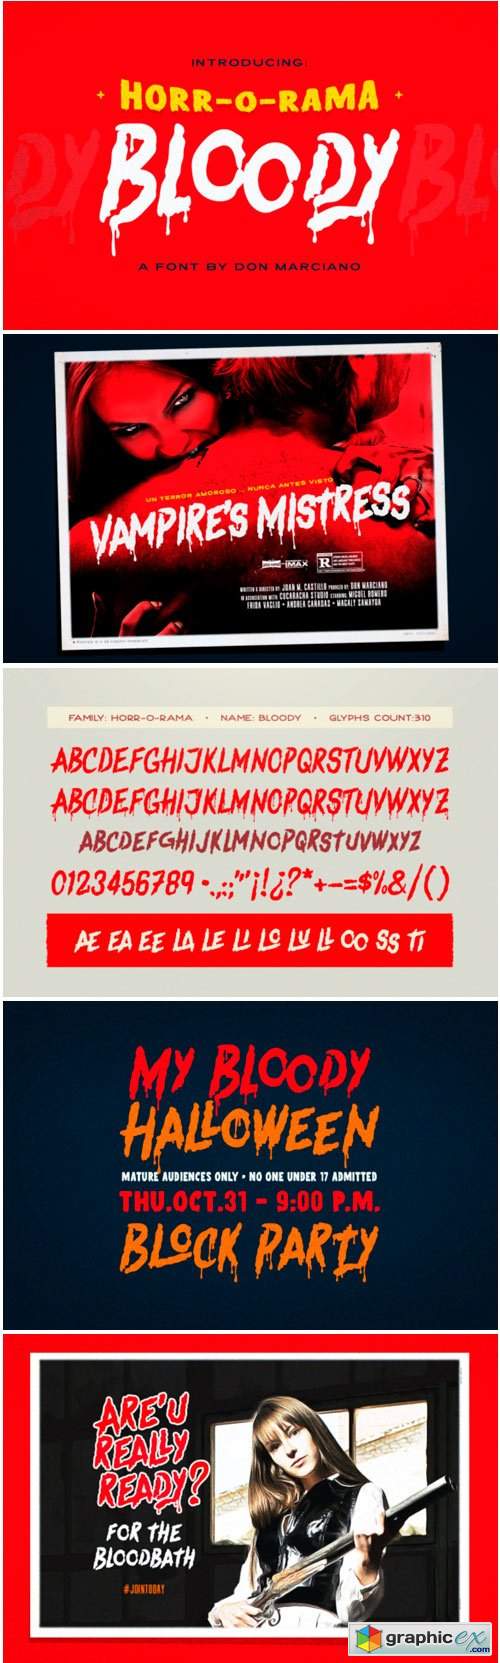 Bloody Font